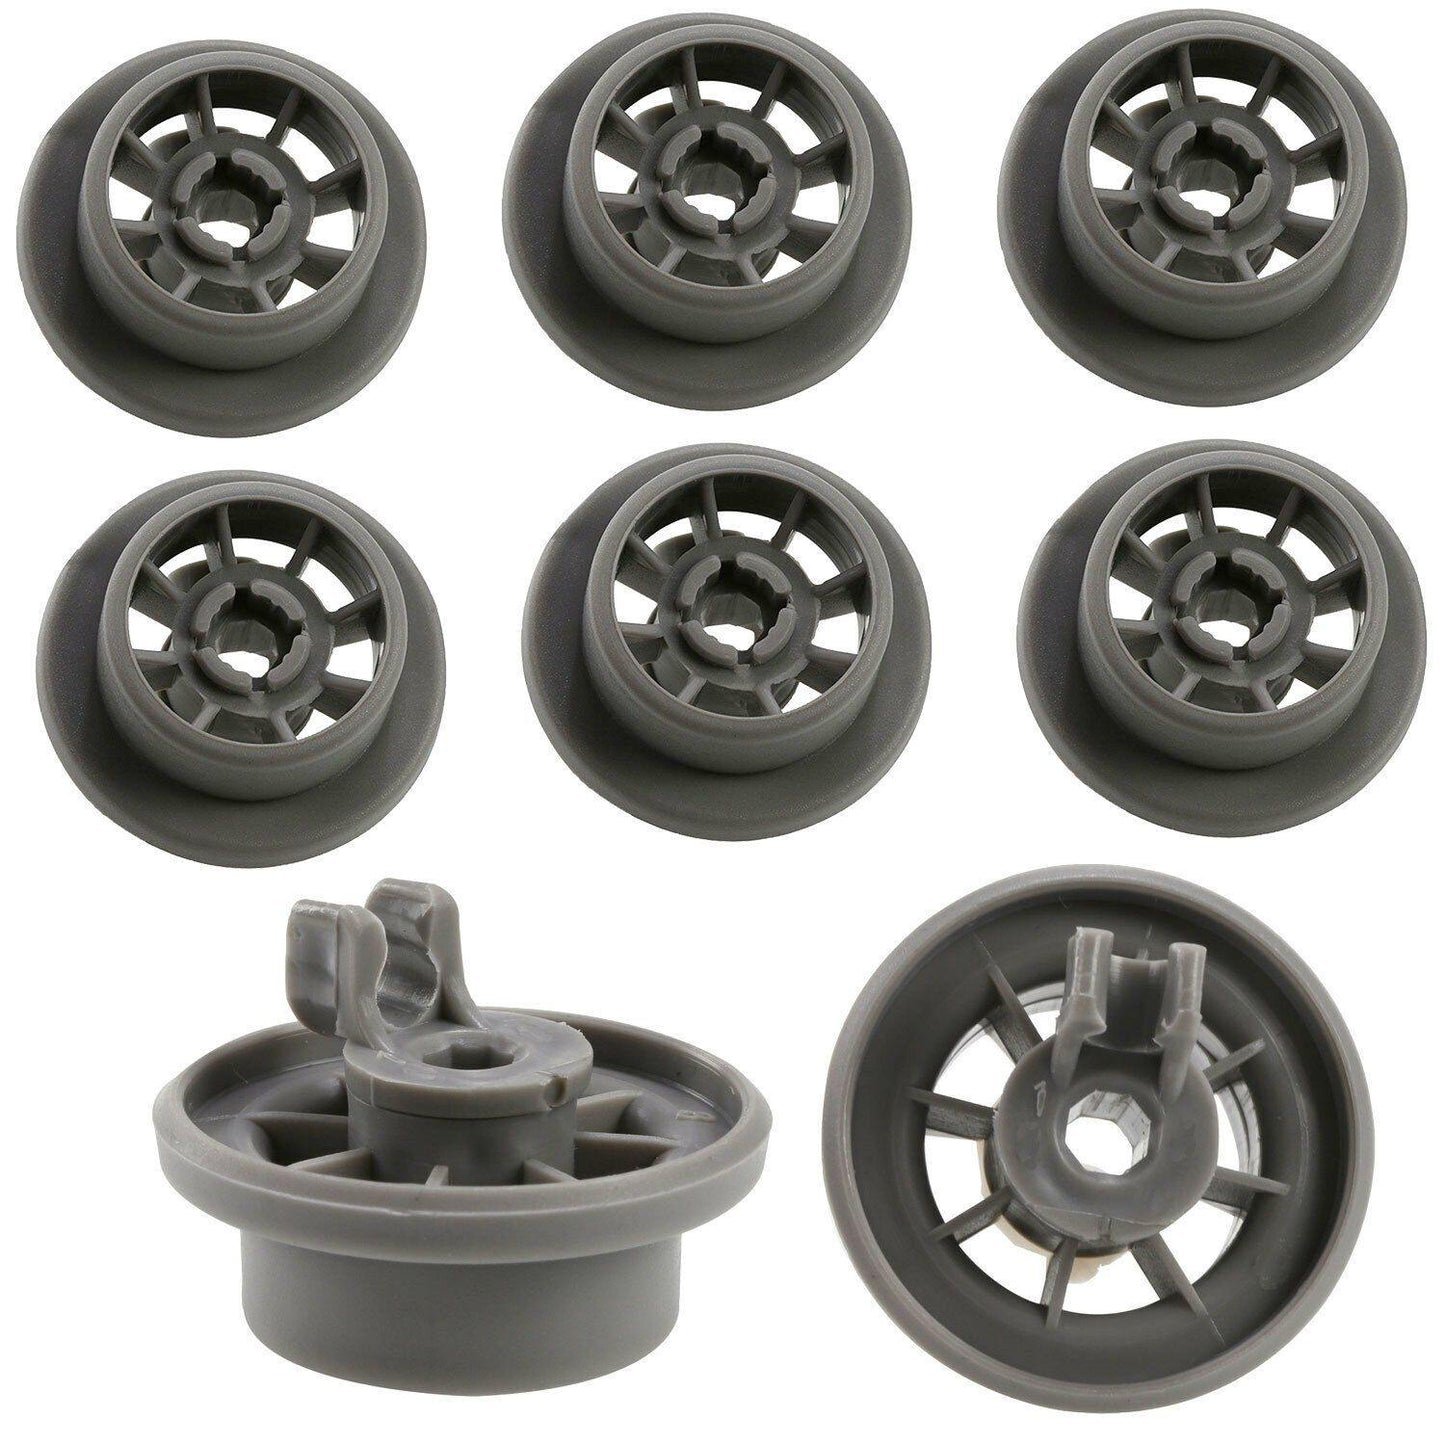 8X Diswasher Lower Bakset Wheel For LG LD-1419T2 LD-1420T2 LD-1421T2 LD-1419W2 Sparesbarn